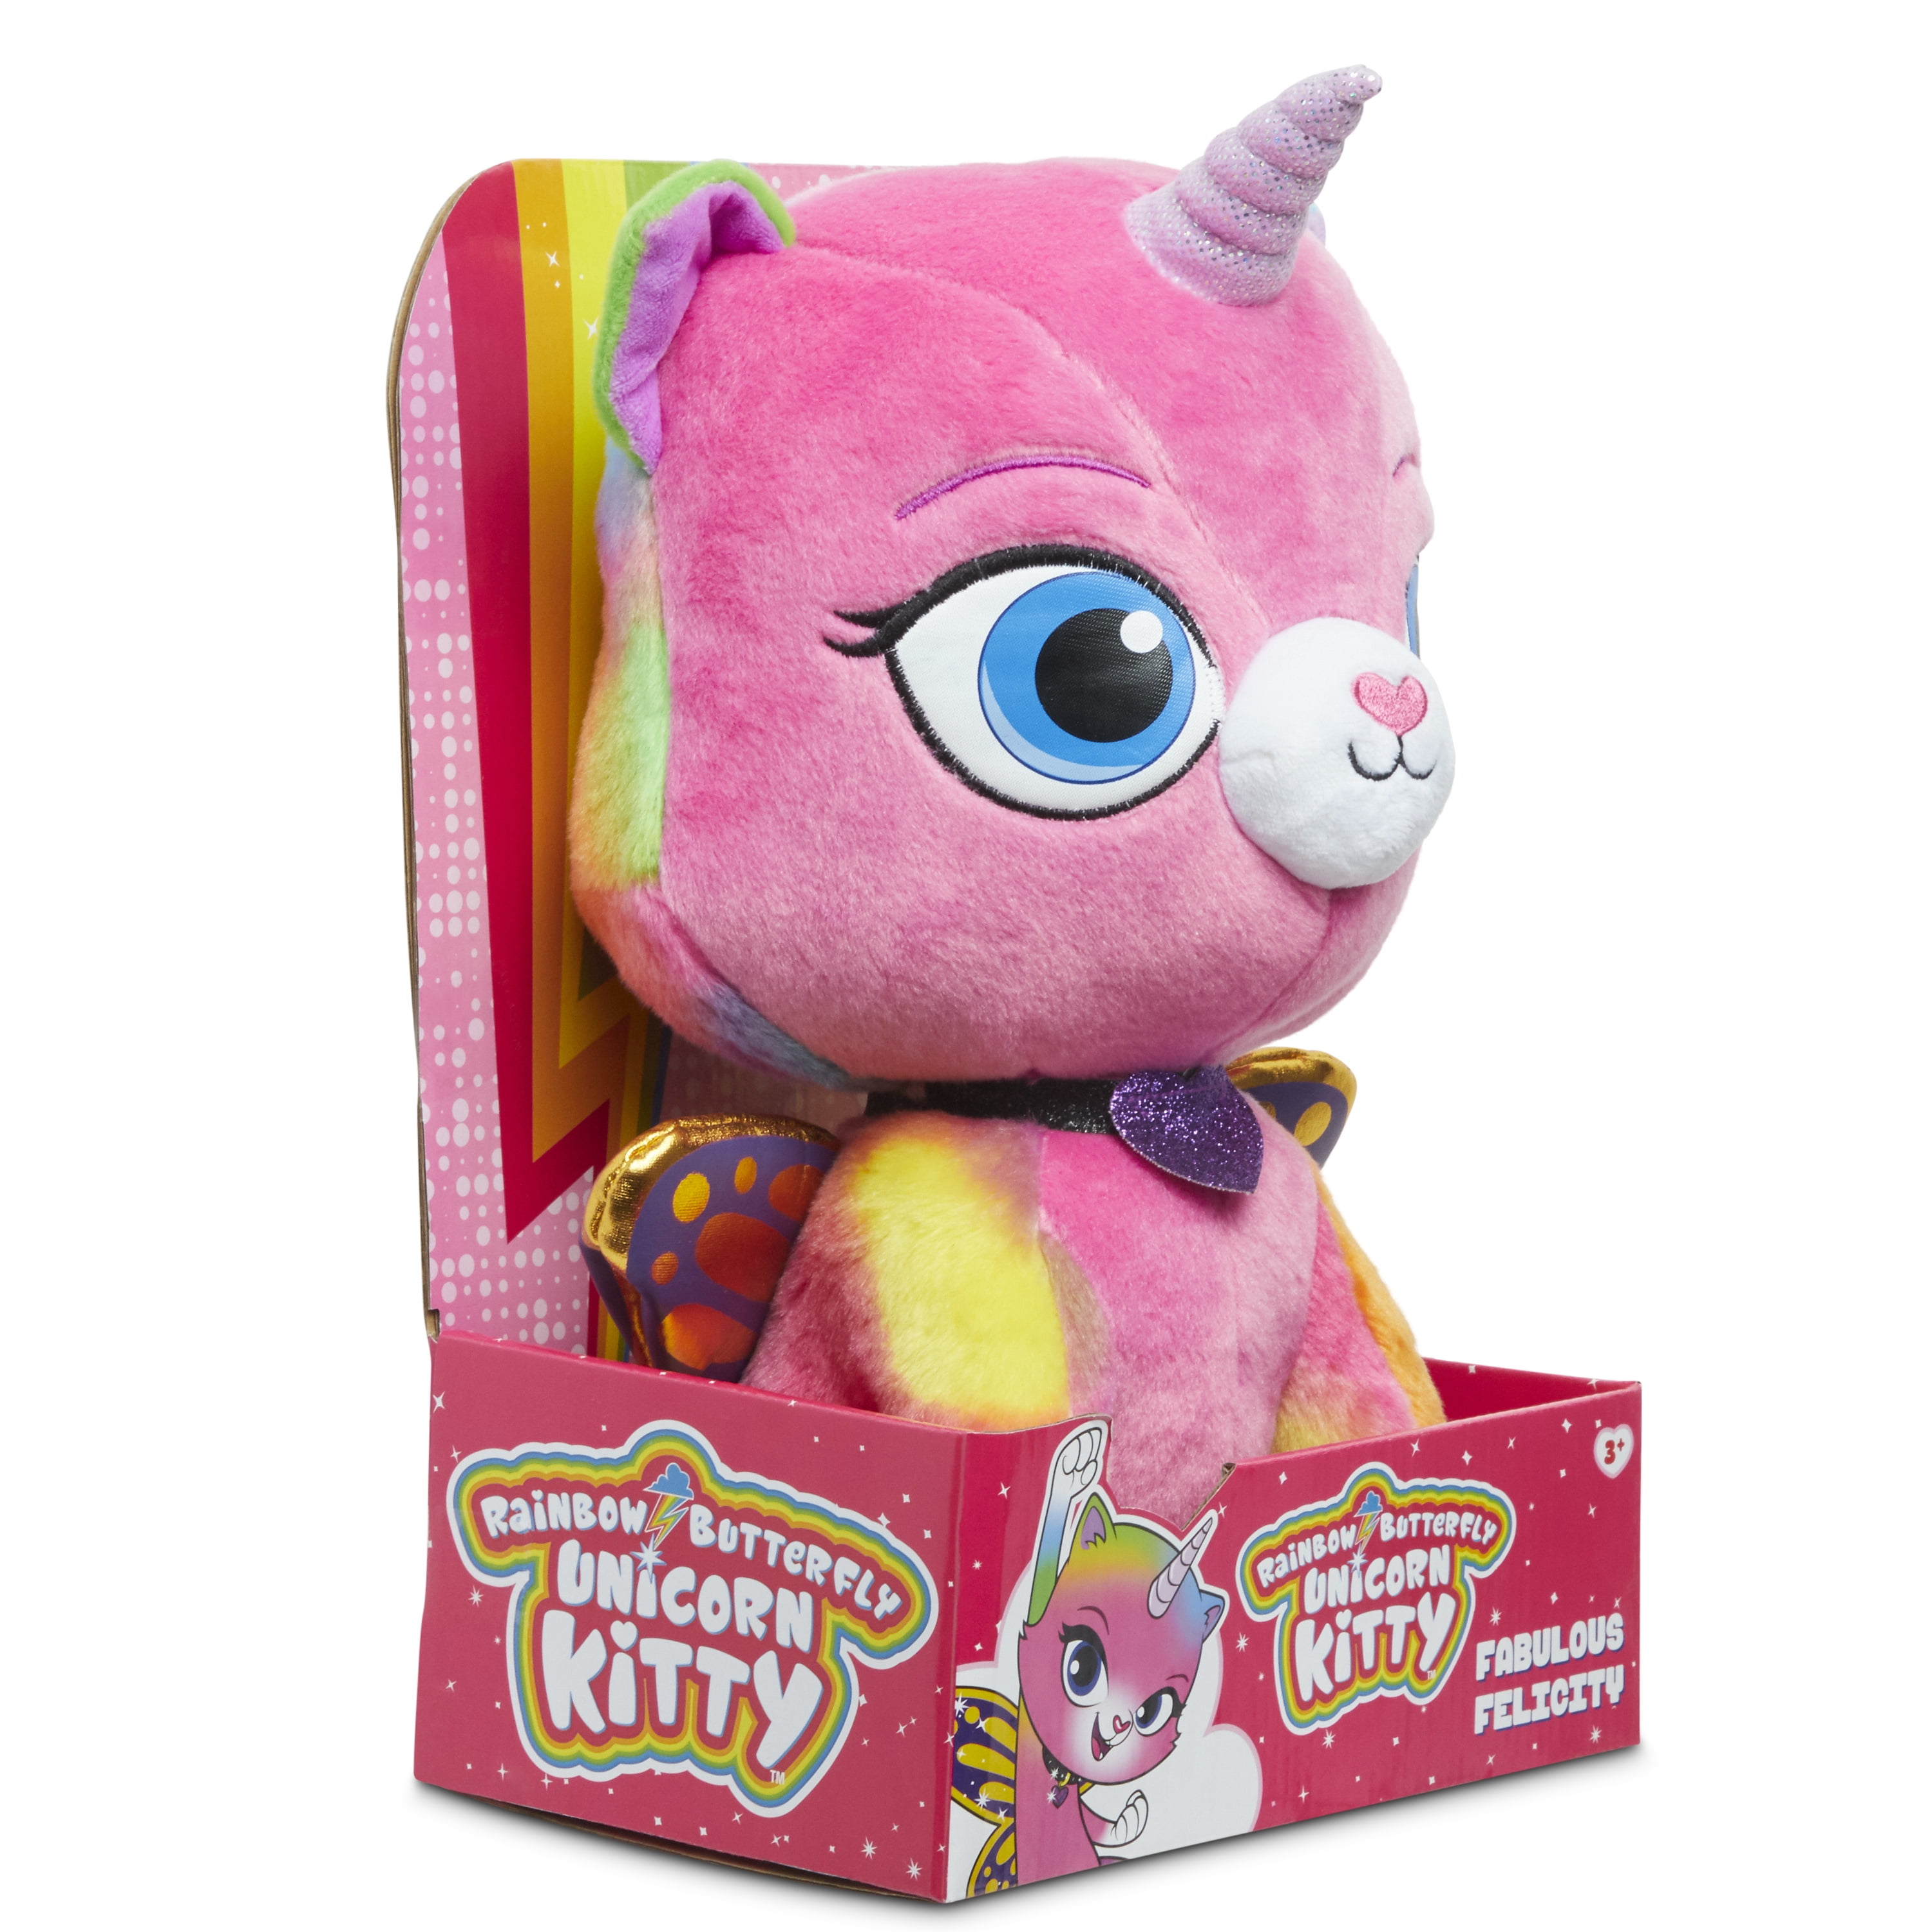 Multi Colered Rainbow Butterfly Unicorn Kitty Fabulous Felicity Huggable Plush Toy 